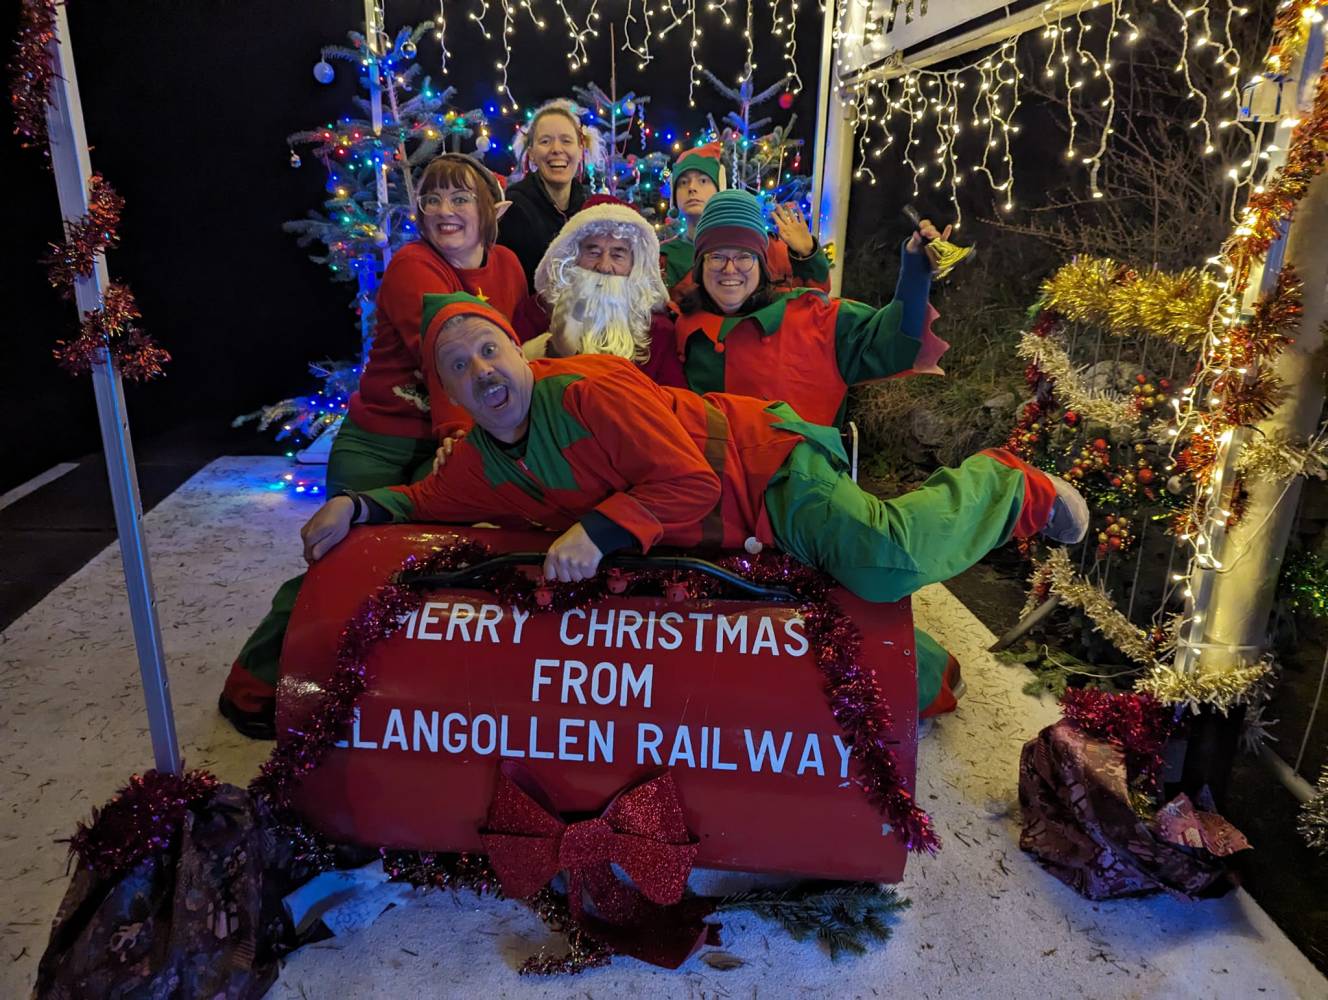 Santa and his elves on the Llangollen Railway Christmas Sleigh